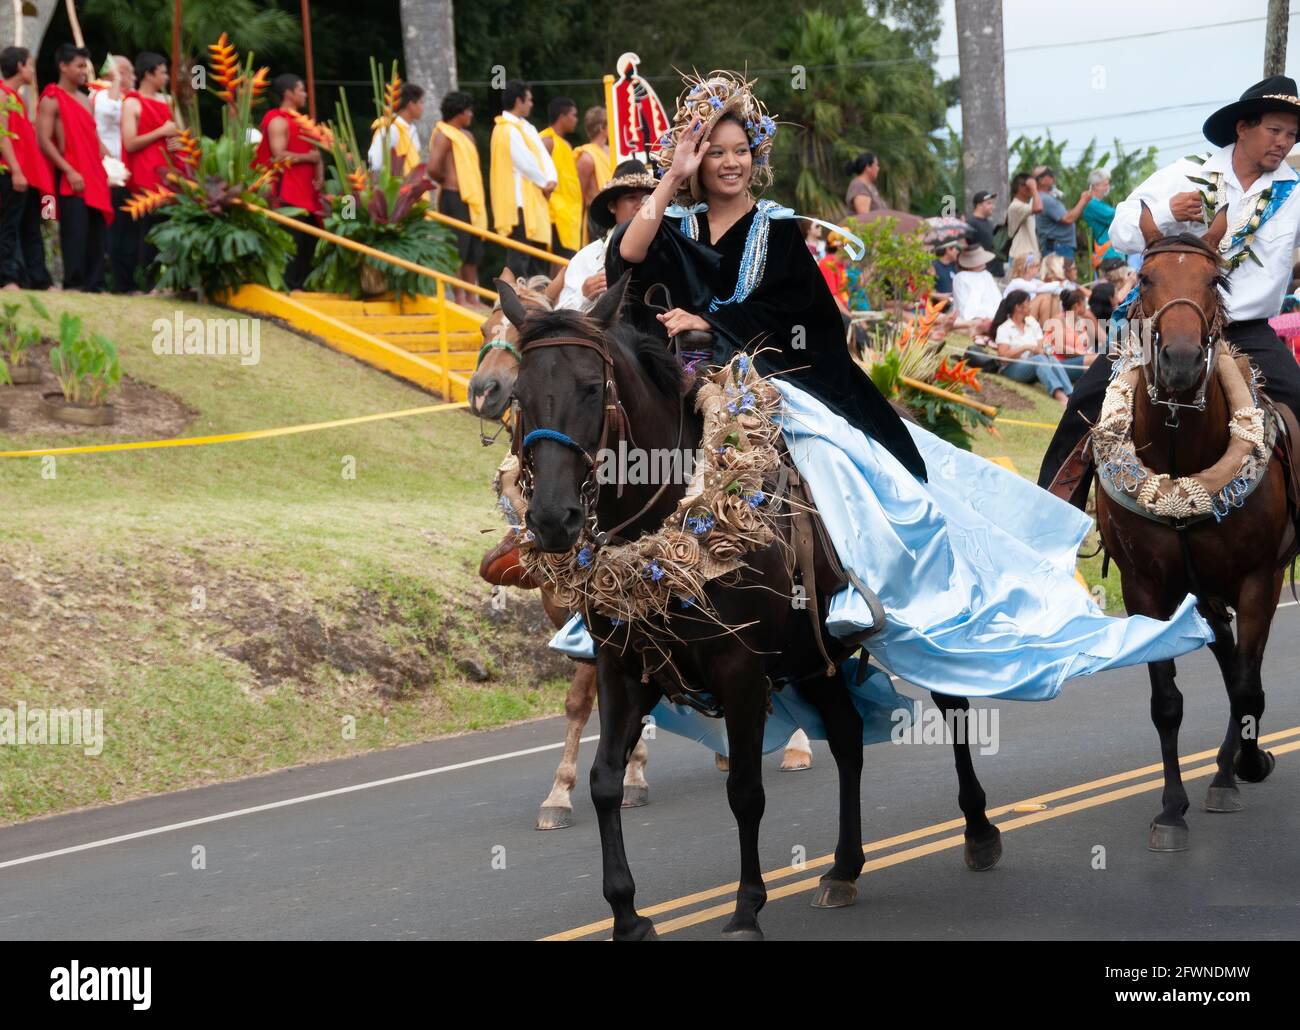 A Pa'u Princess Representing the Big Island Rides with her Paniolo Escort in the King Kamehameha Day Parade in Kapa'au, N.Kohala, Big Island, Hawaii Stock Photo